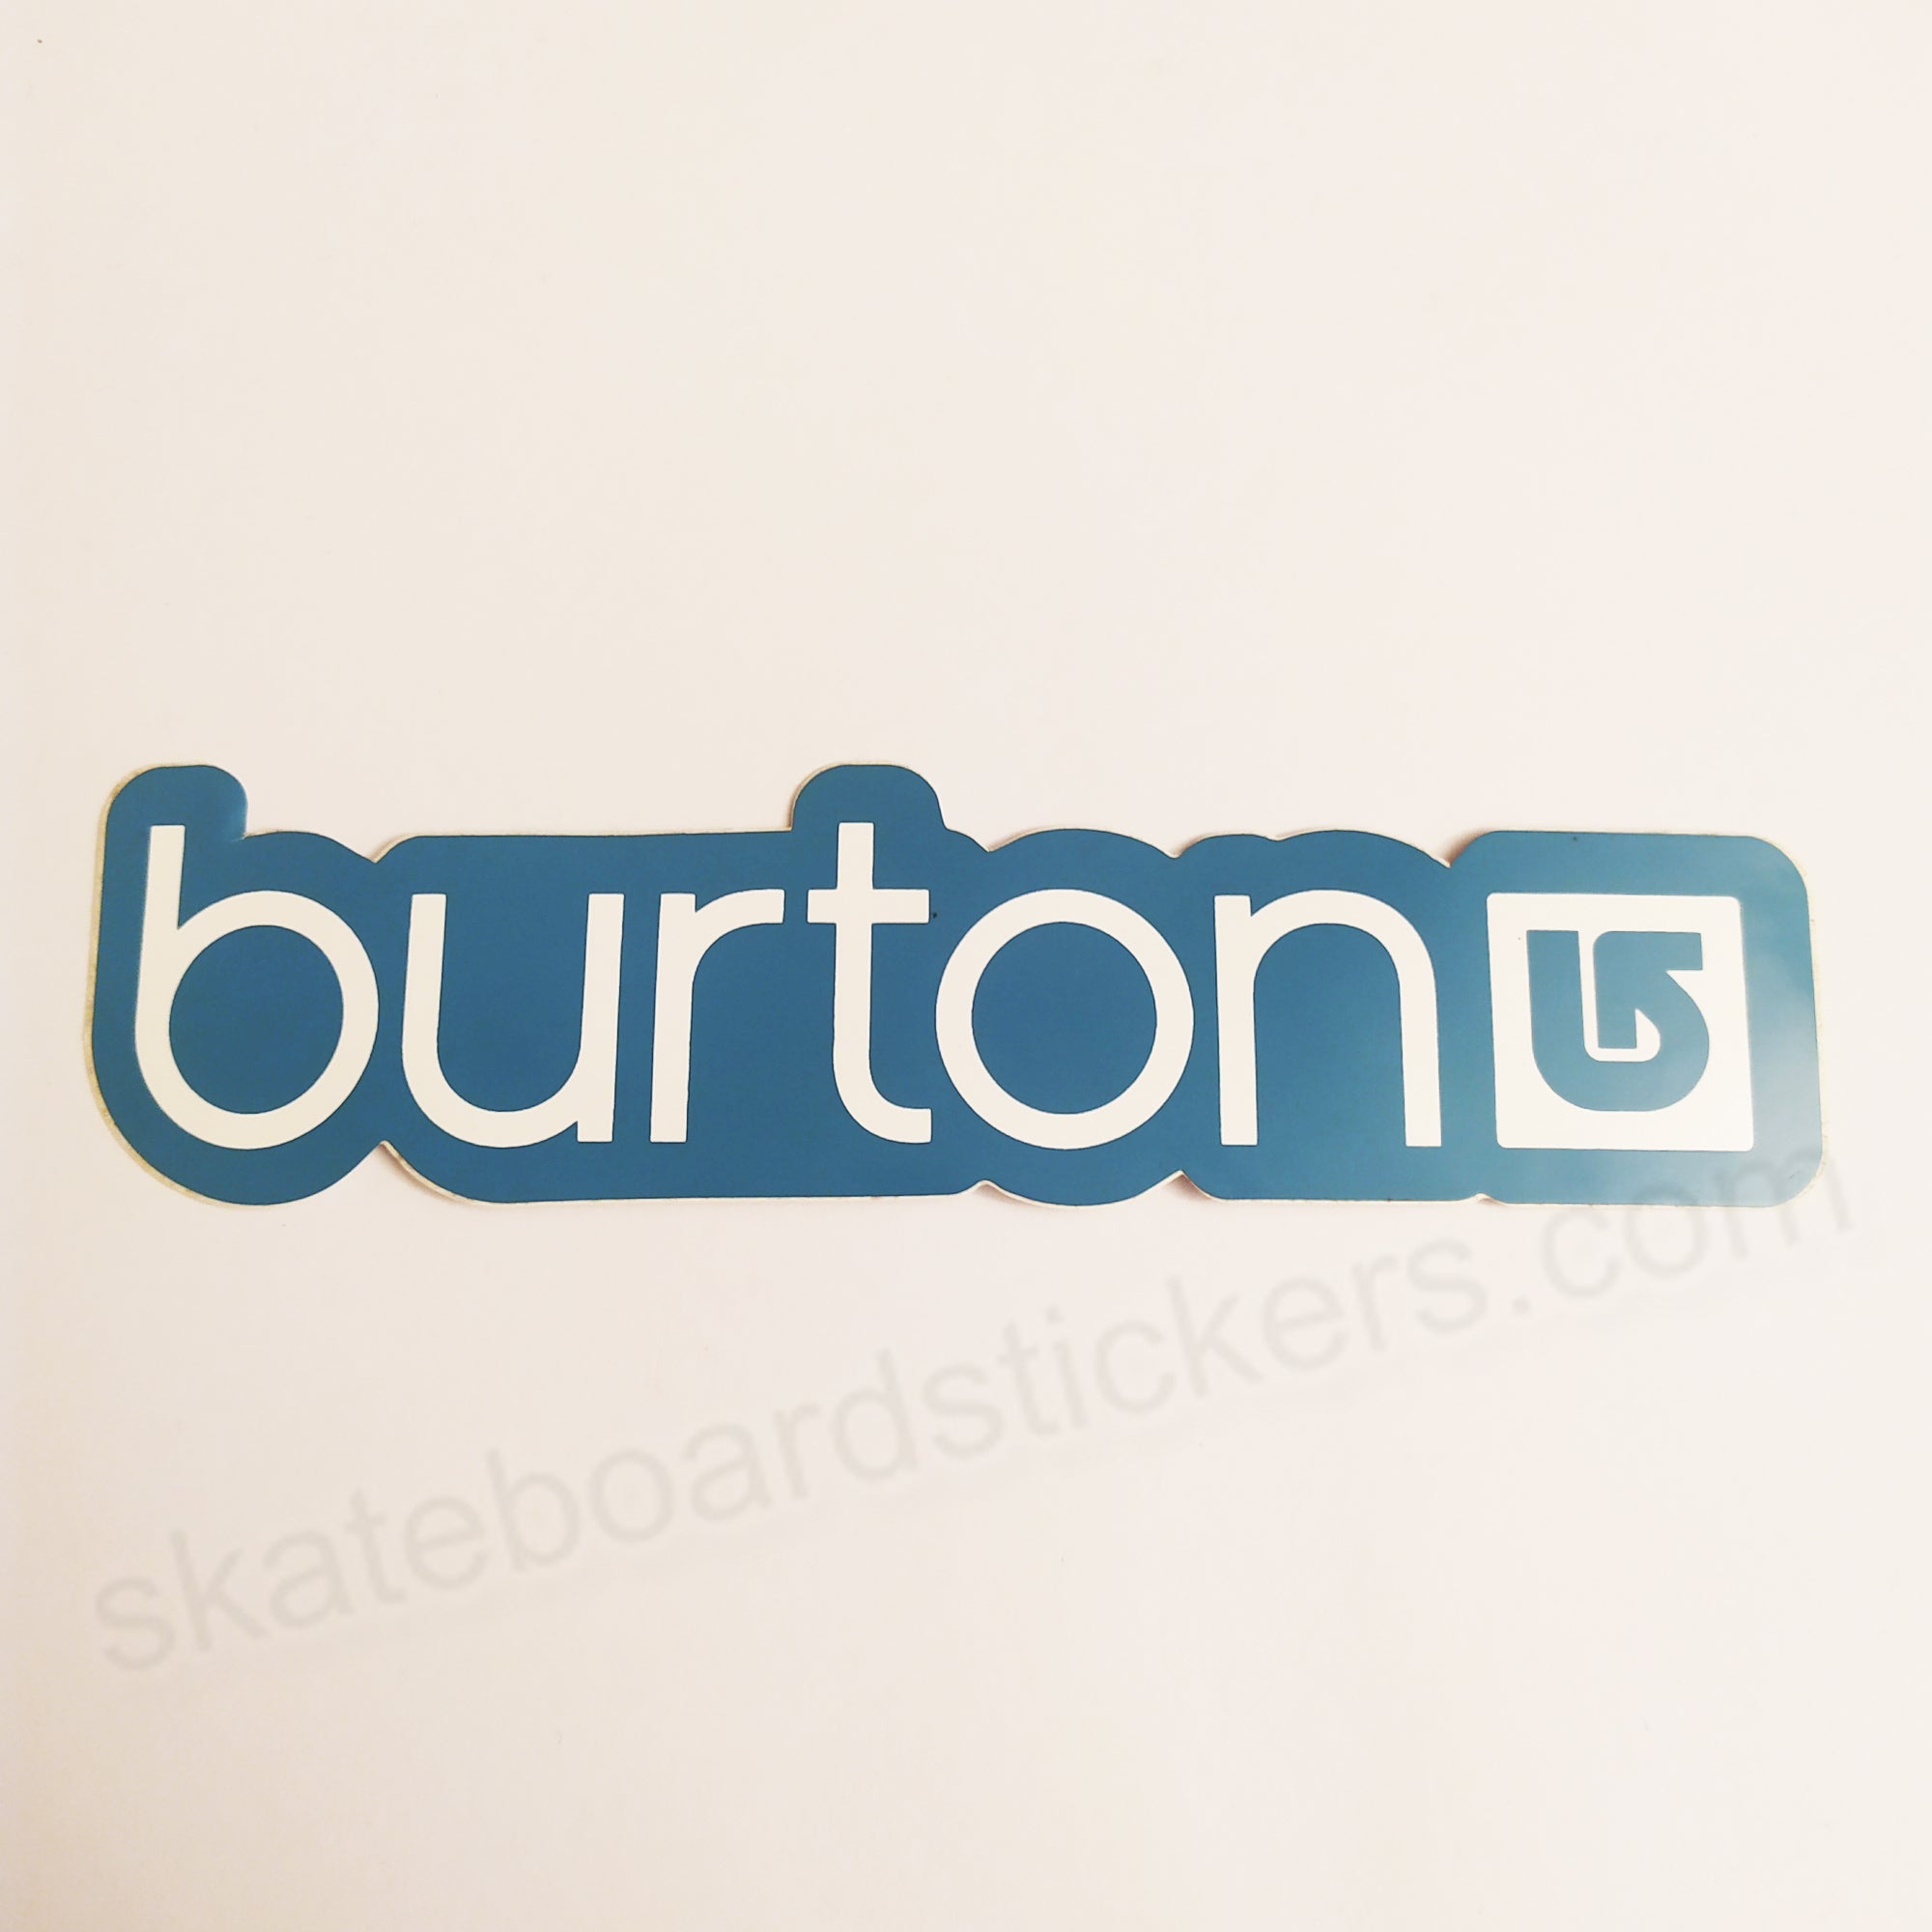 Burton Snowboards Sticker - blue - SkateboardStickers.com